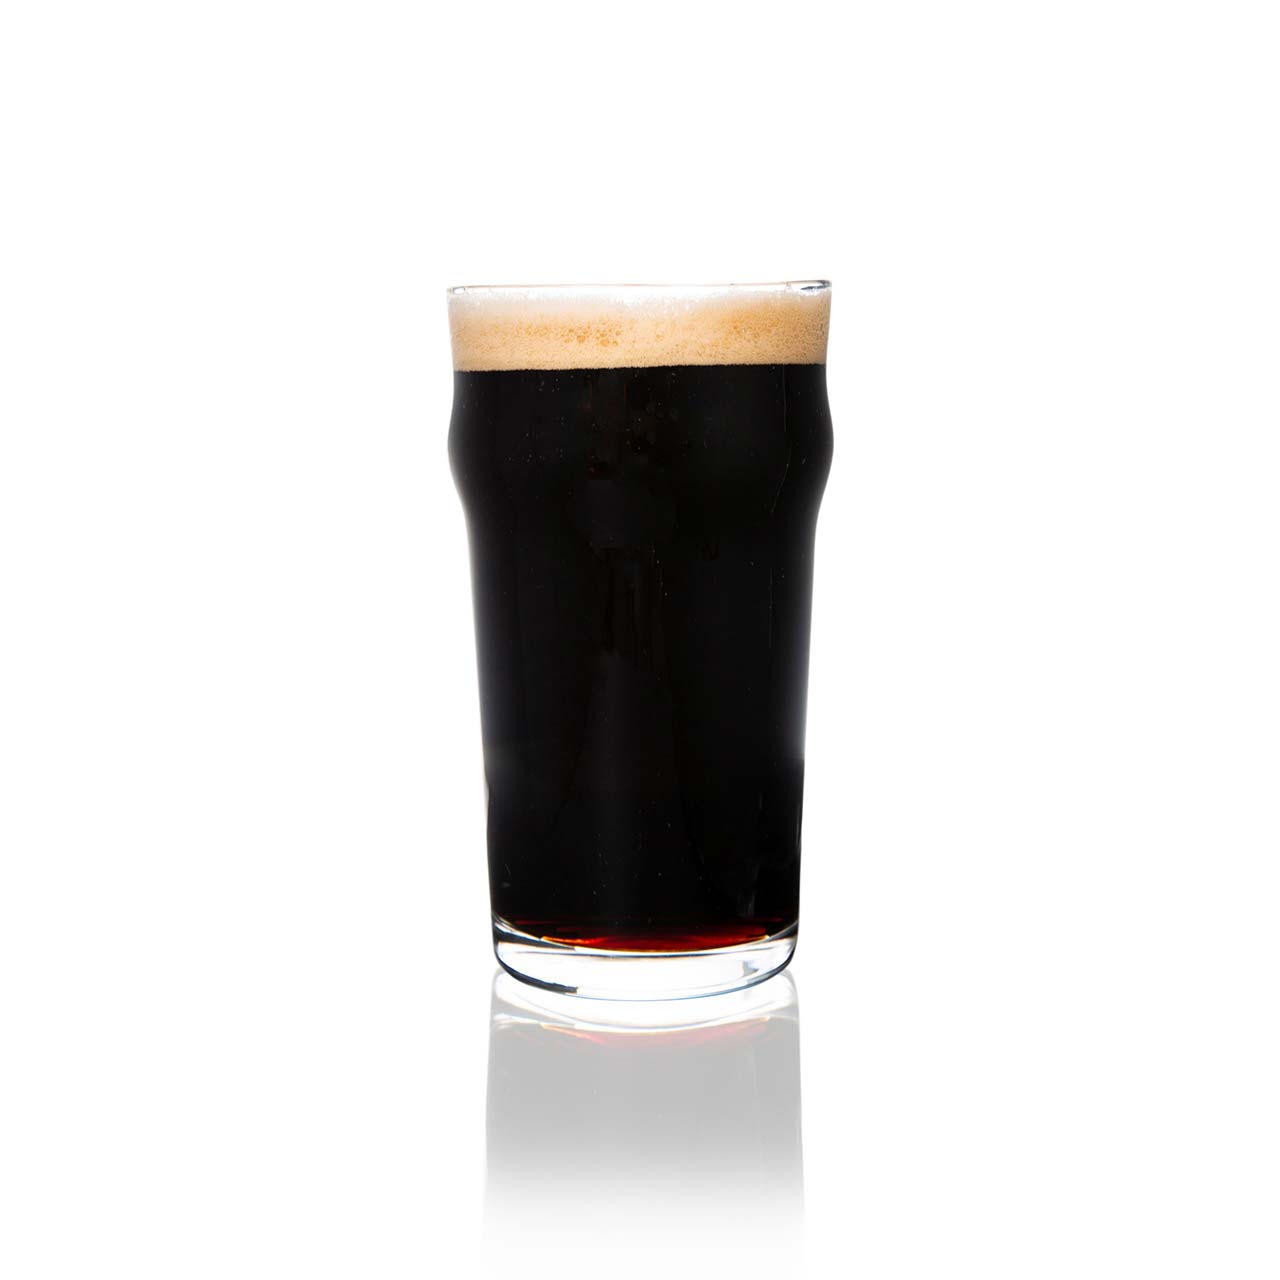 https://www.craftmastergrowlers.com/wp-content/uploads/2020/07/nonic-beer-glass-pint-with-dark-beer.jpg